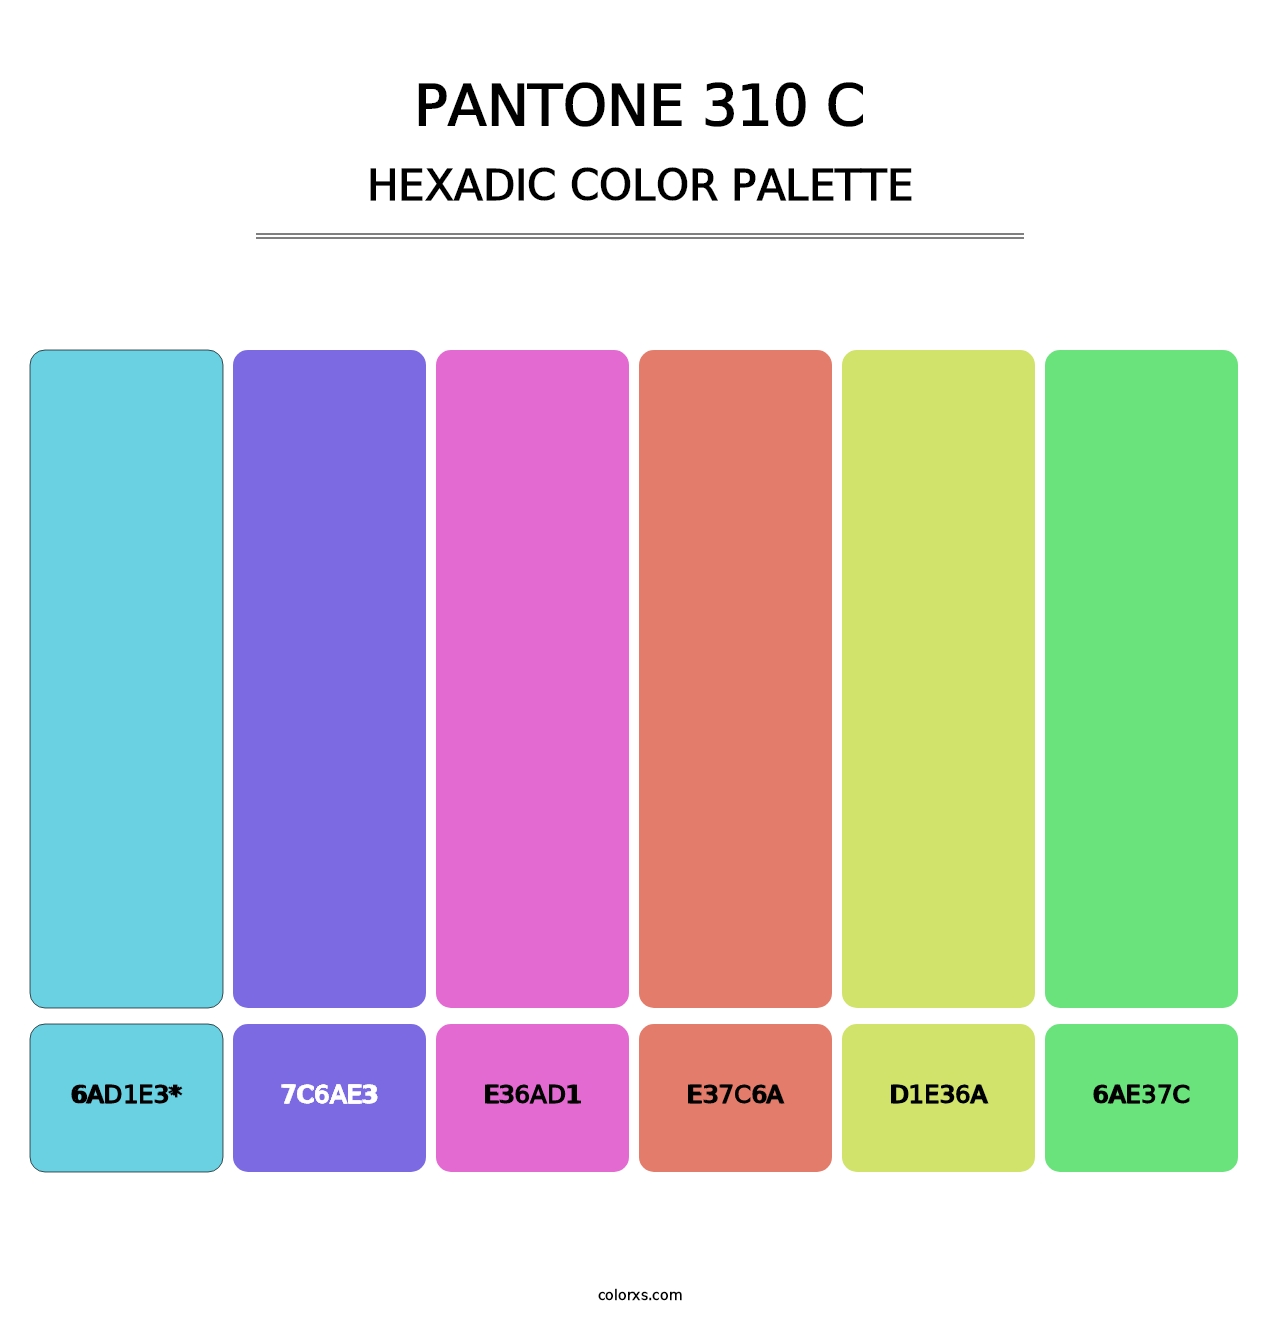 PANTONE 310 C - Hexadic Color Palette